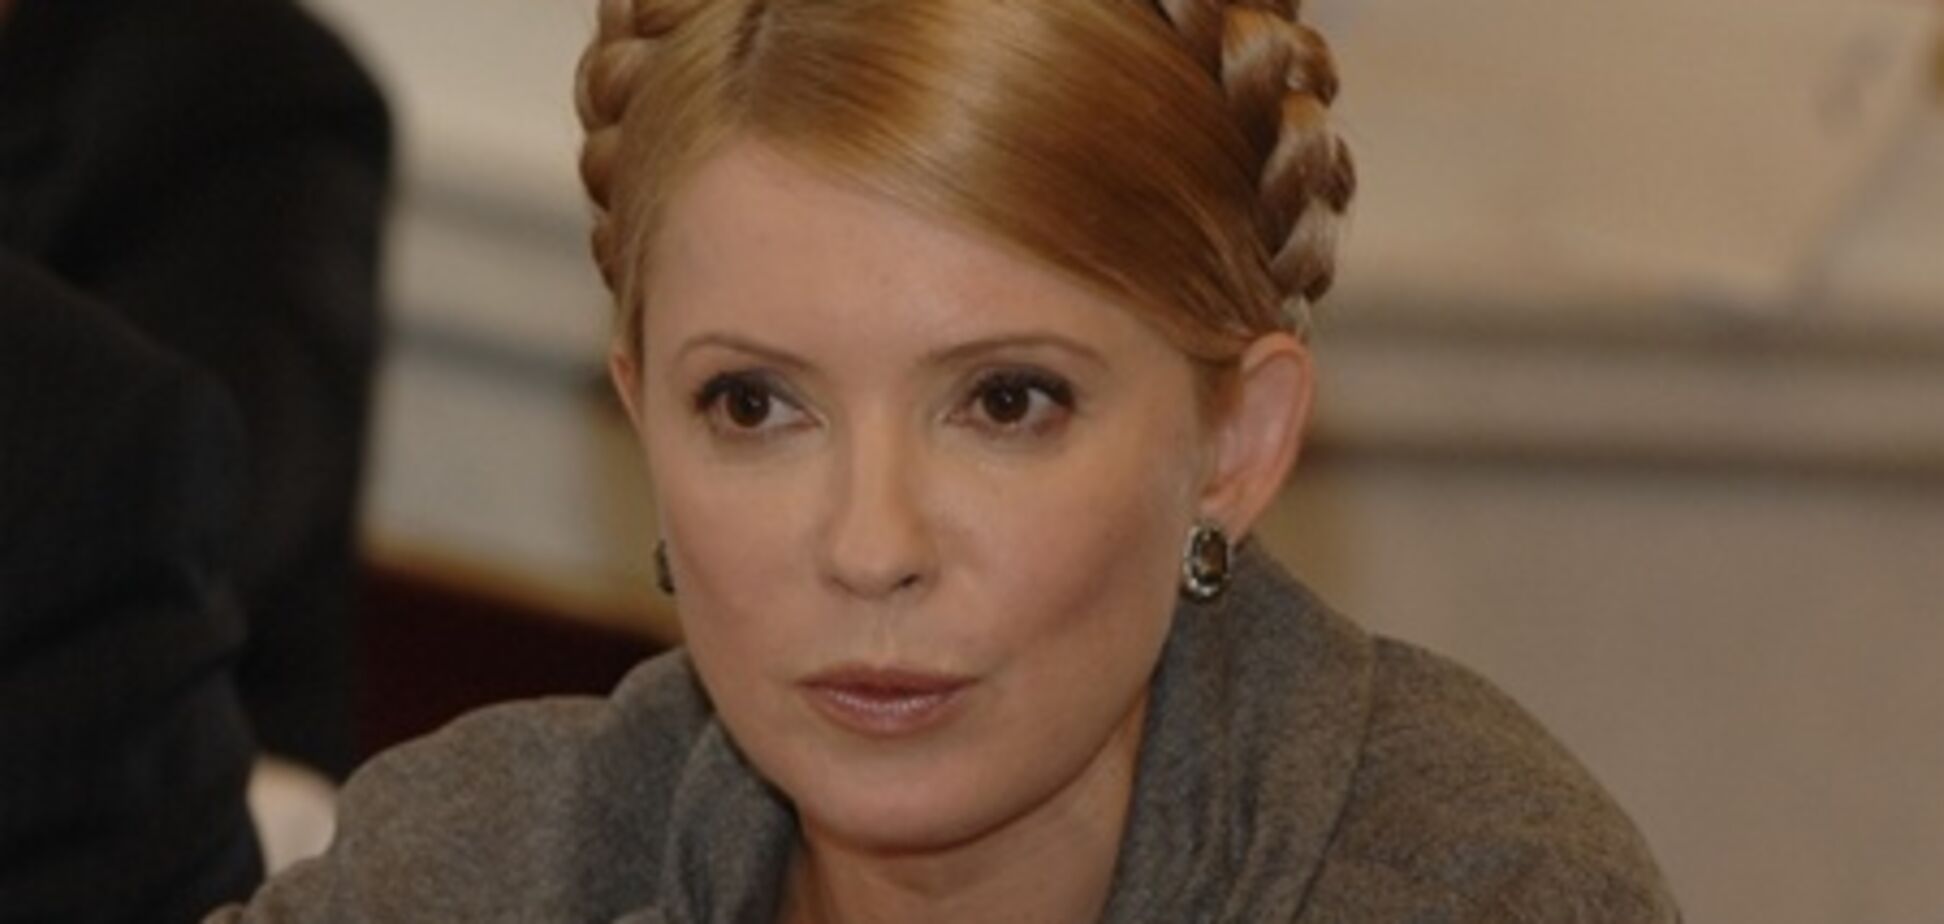 ЕНП: Евросуд подтвердил политический характер ареста Тимошенко